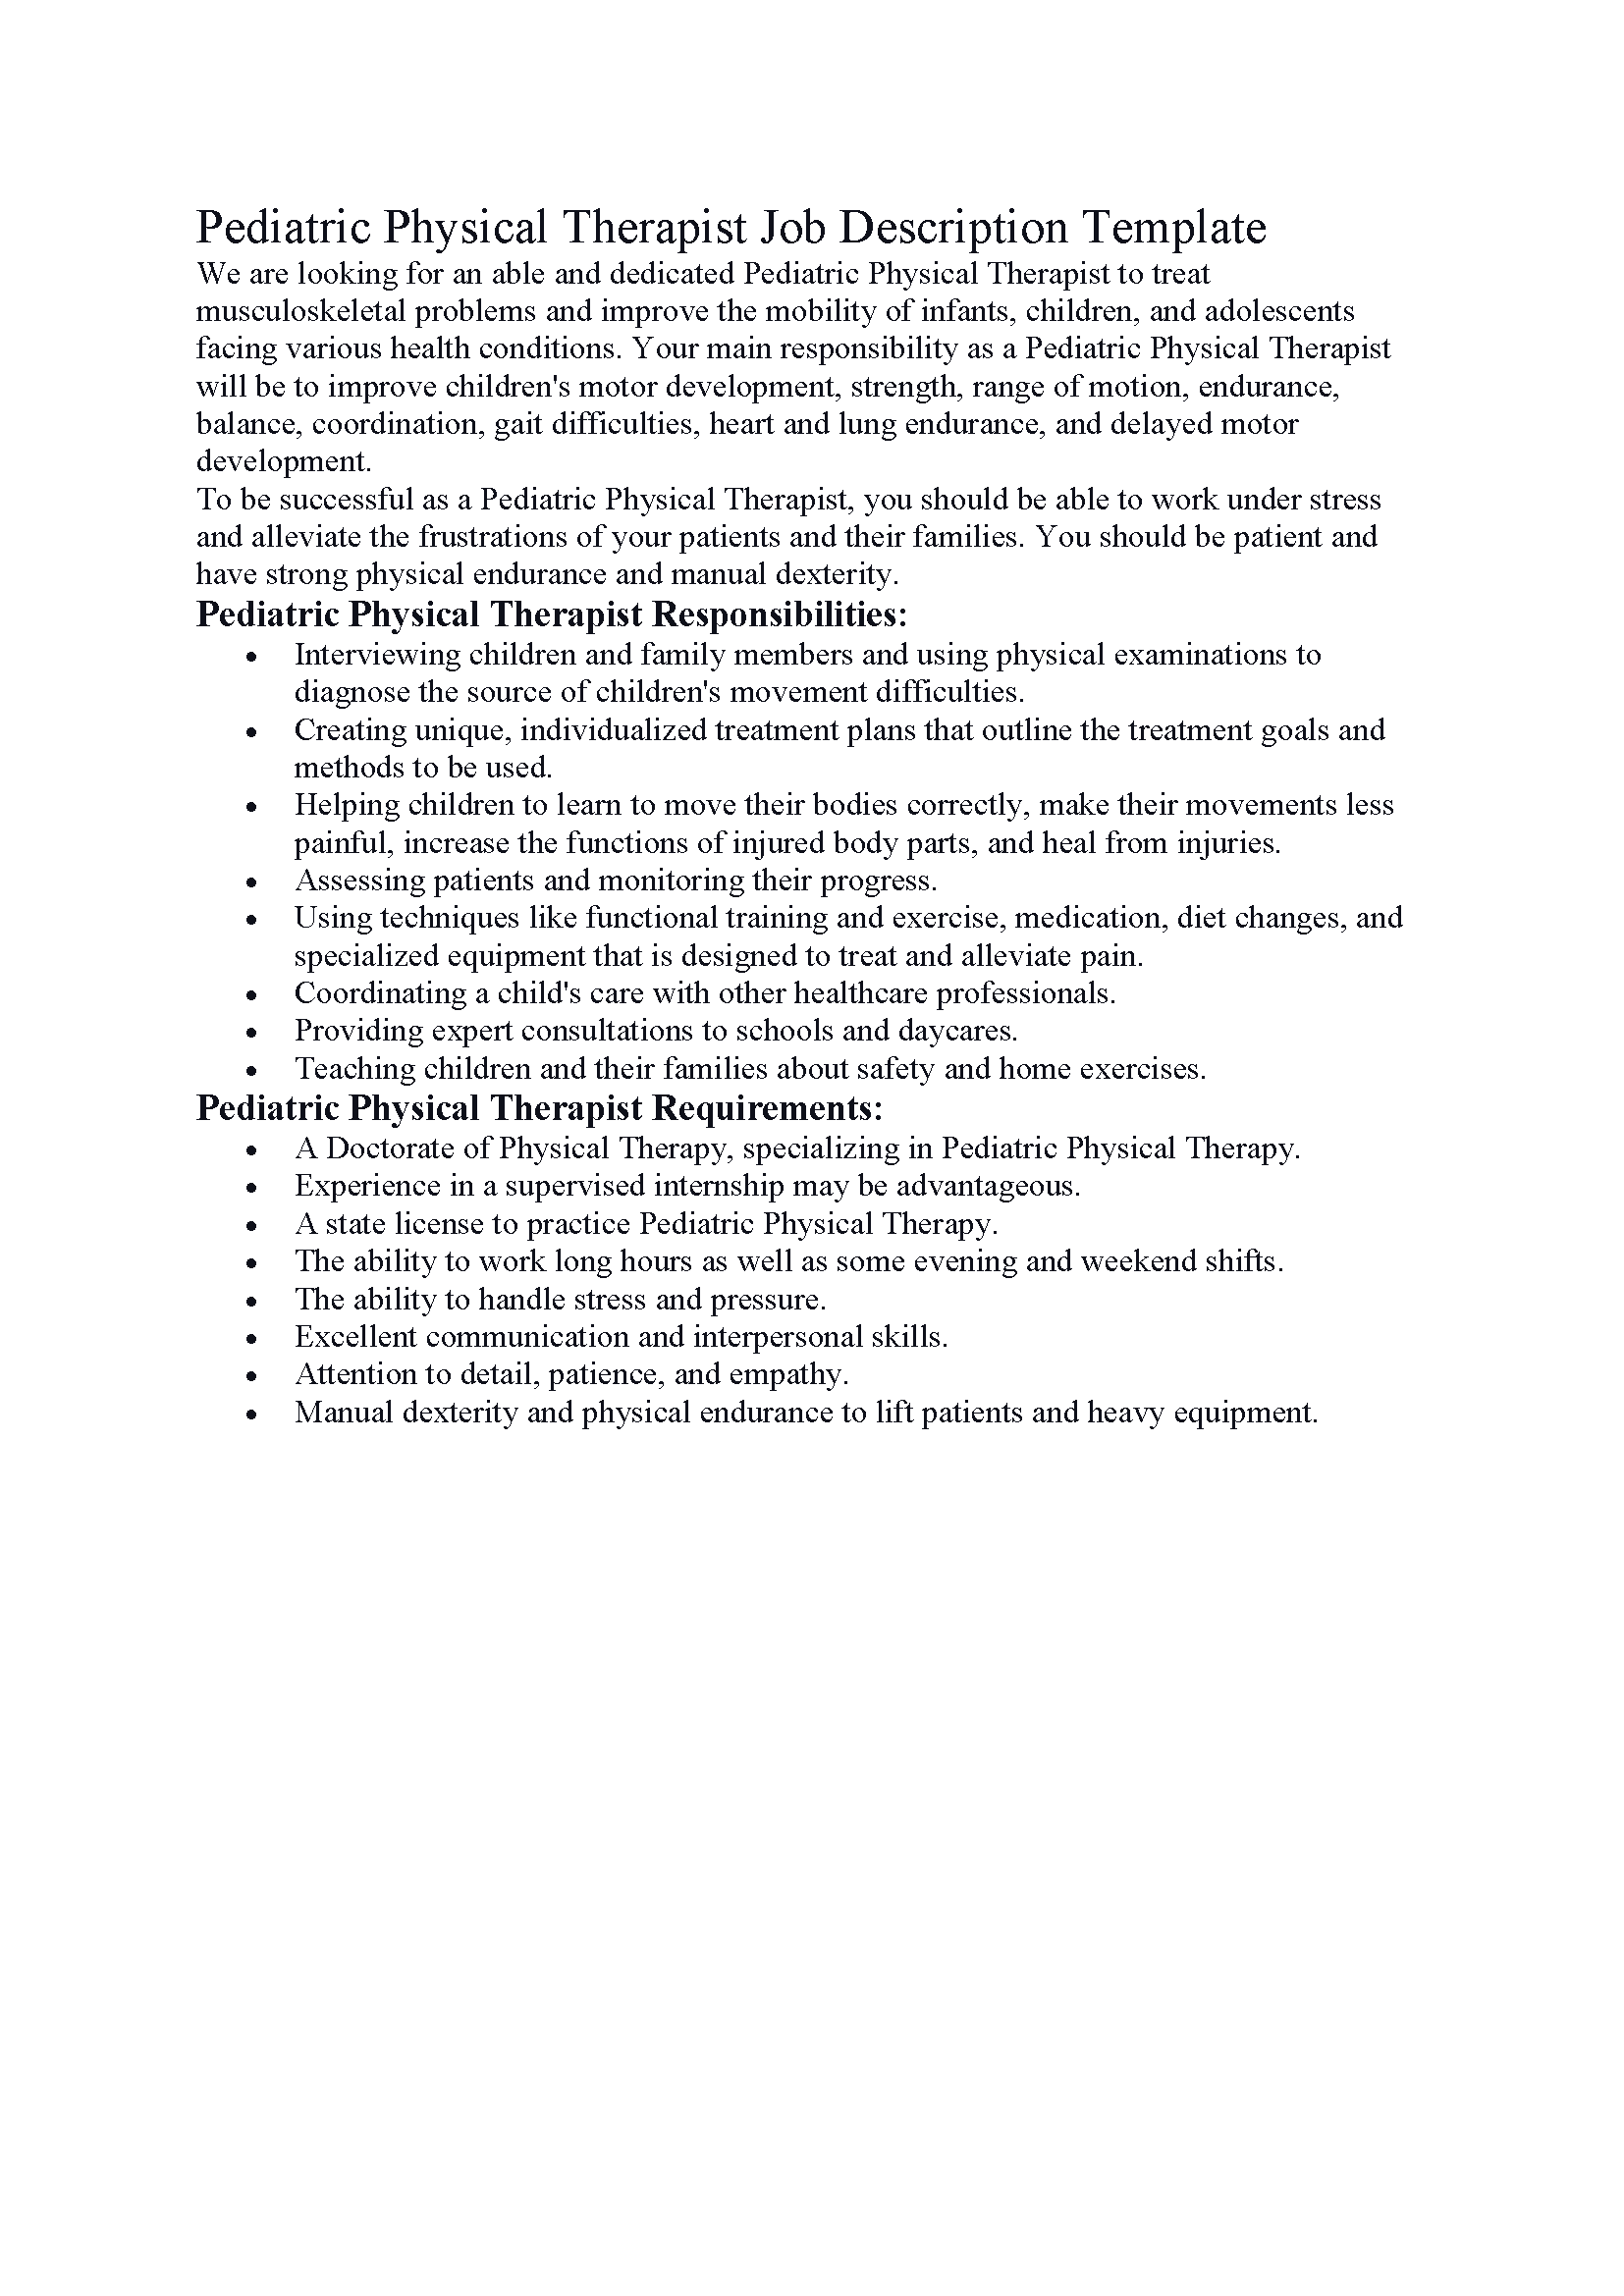 Pediatric Physical Therapist Job Description Template